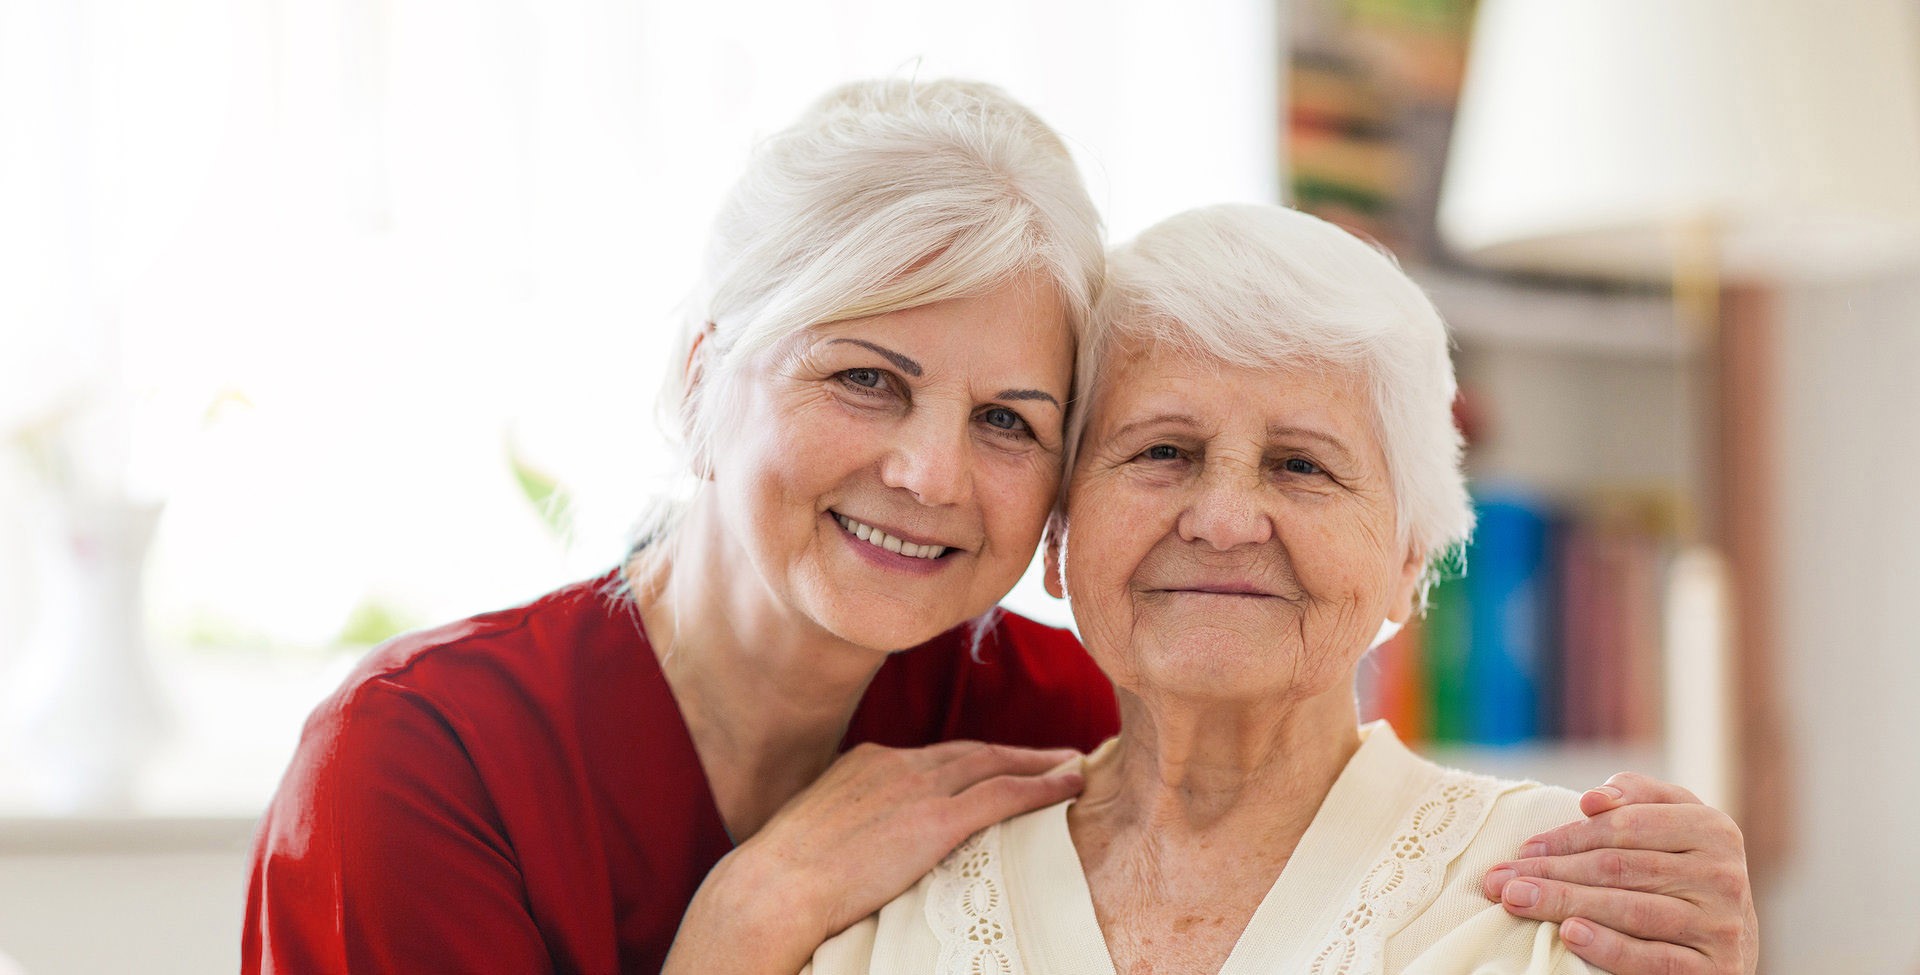 A nurse caregiver and an elderly patient smiling together.